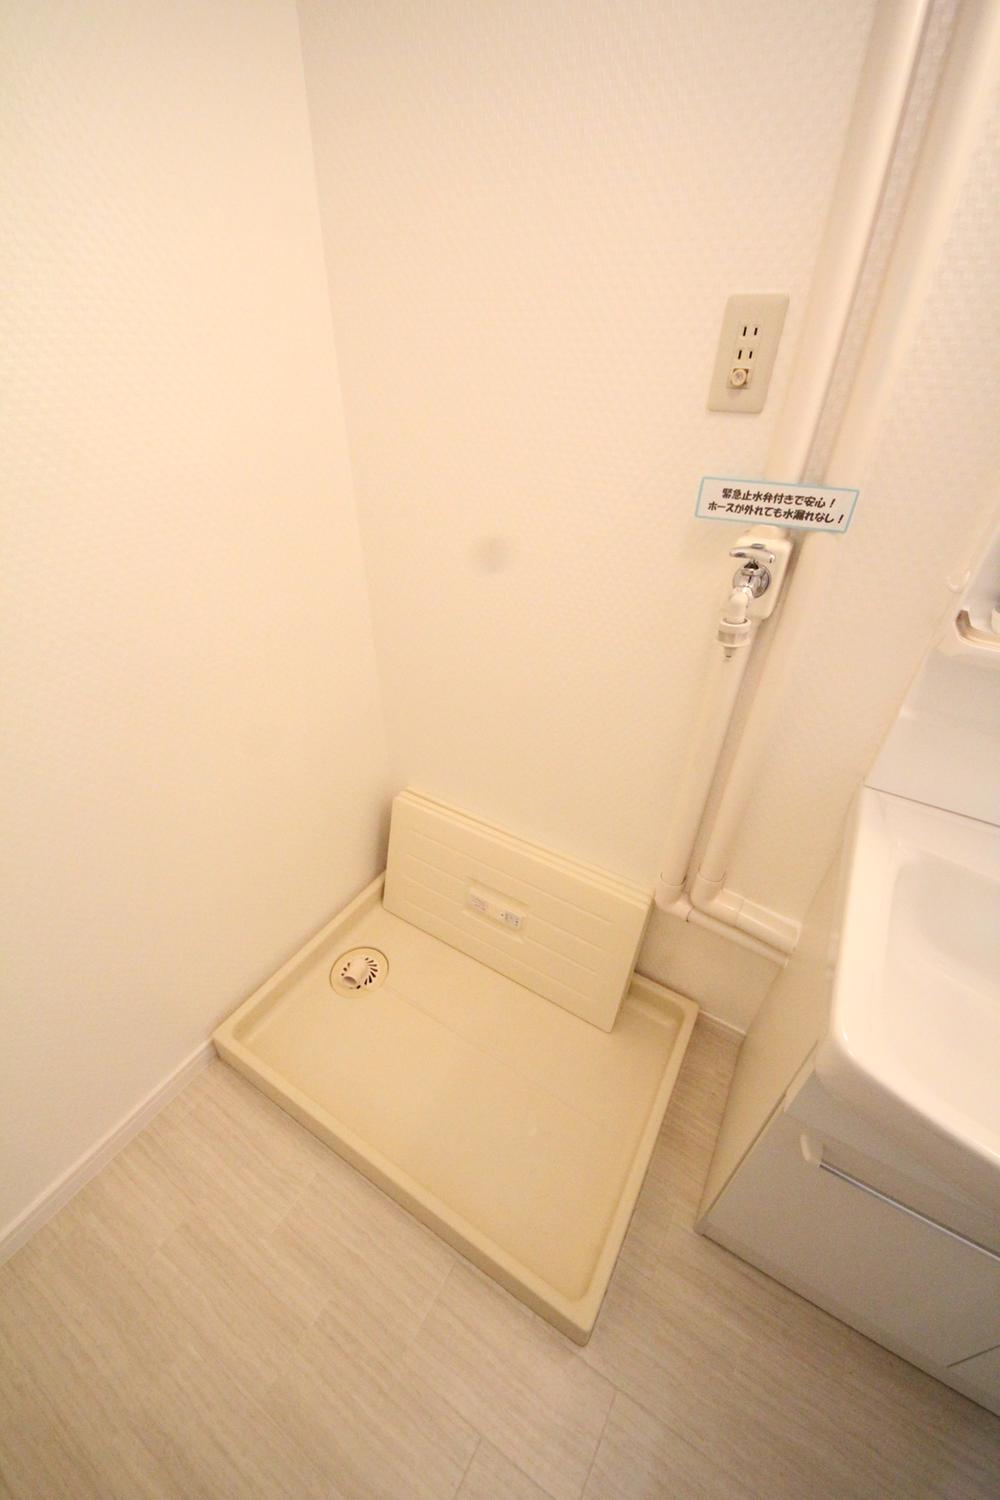 Wash basin, toilet. (October 2013) Shooting